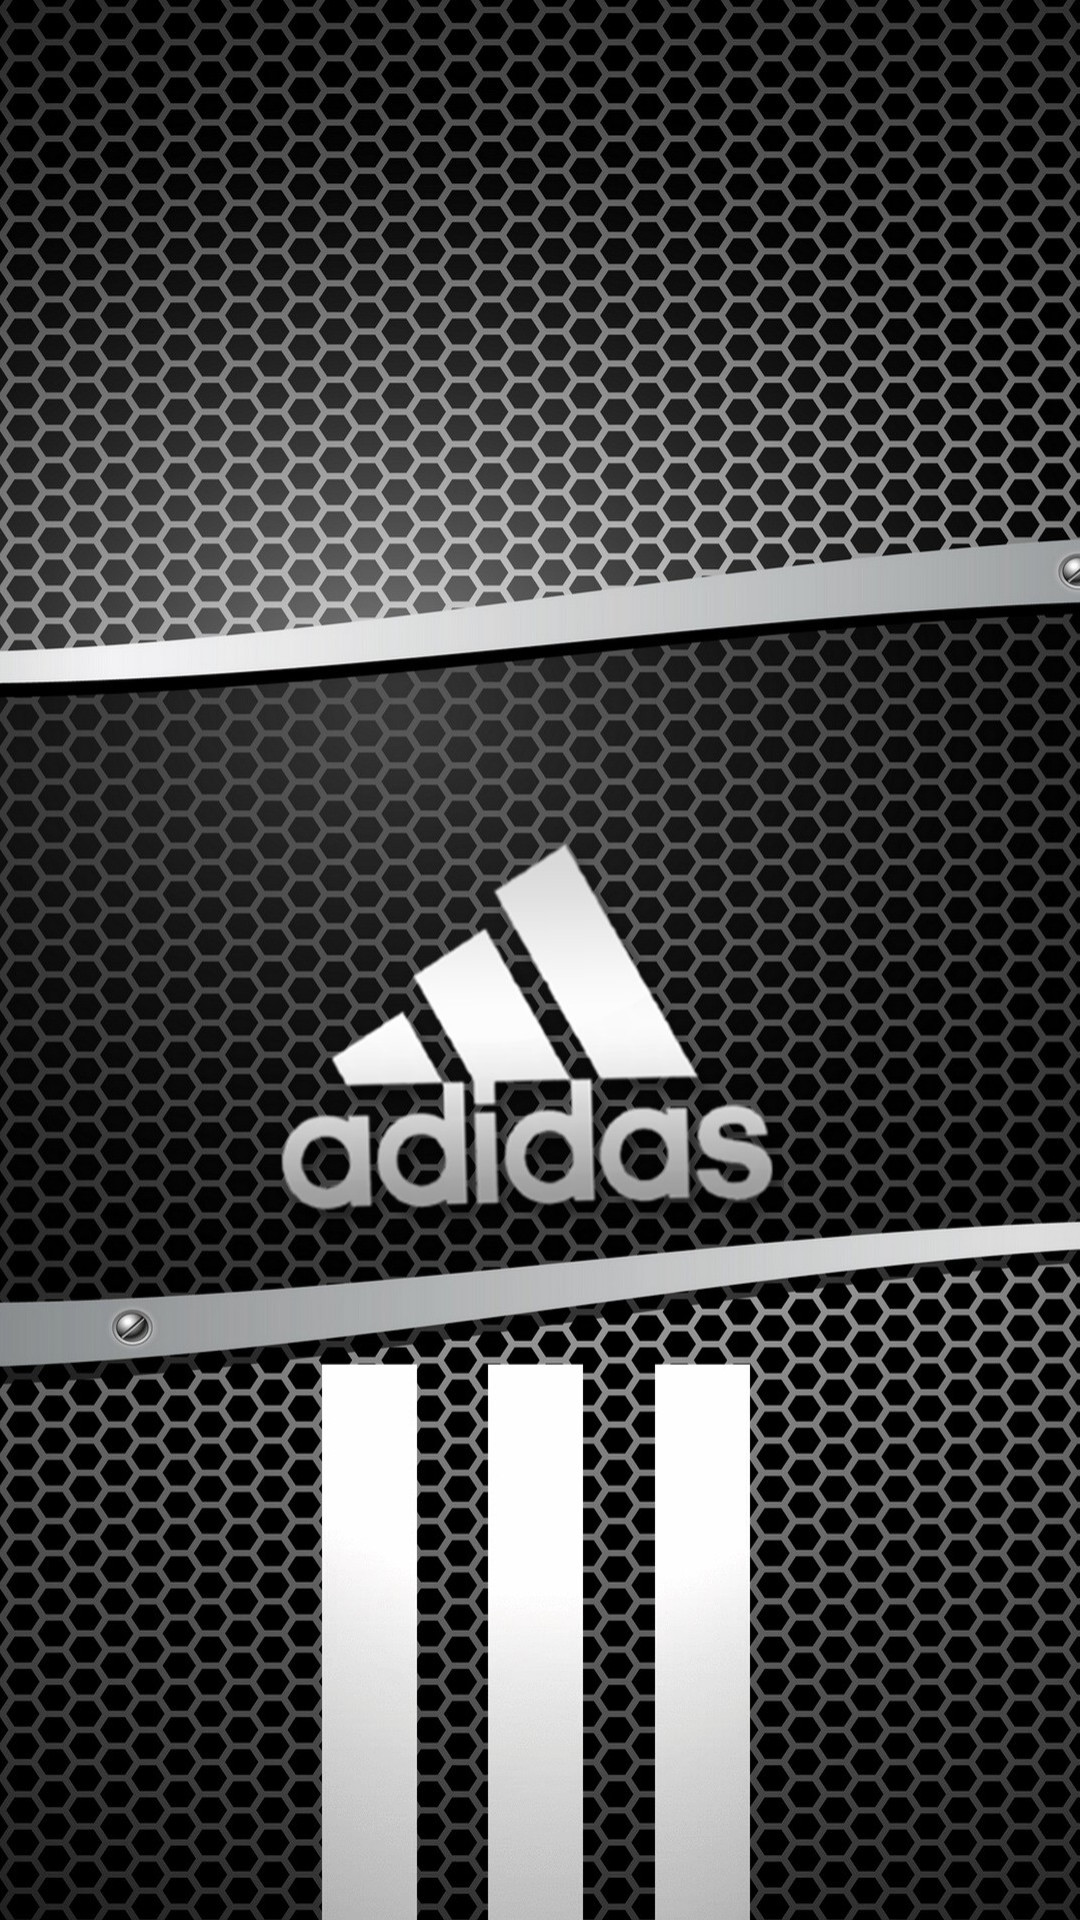 adidas wallpaper,font,text,line,pattern,logo